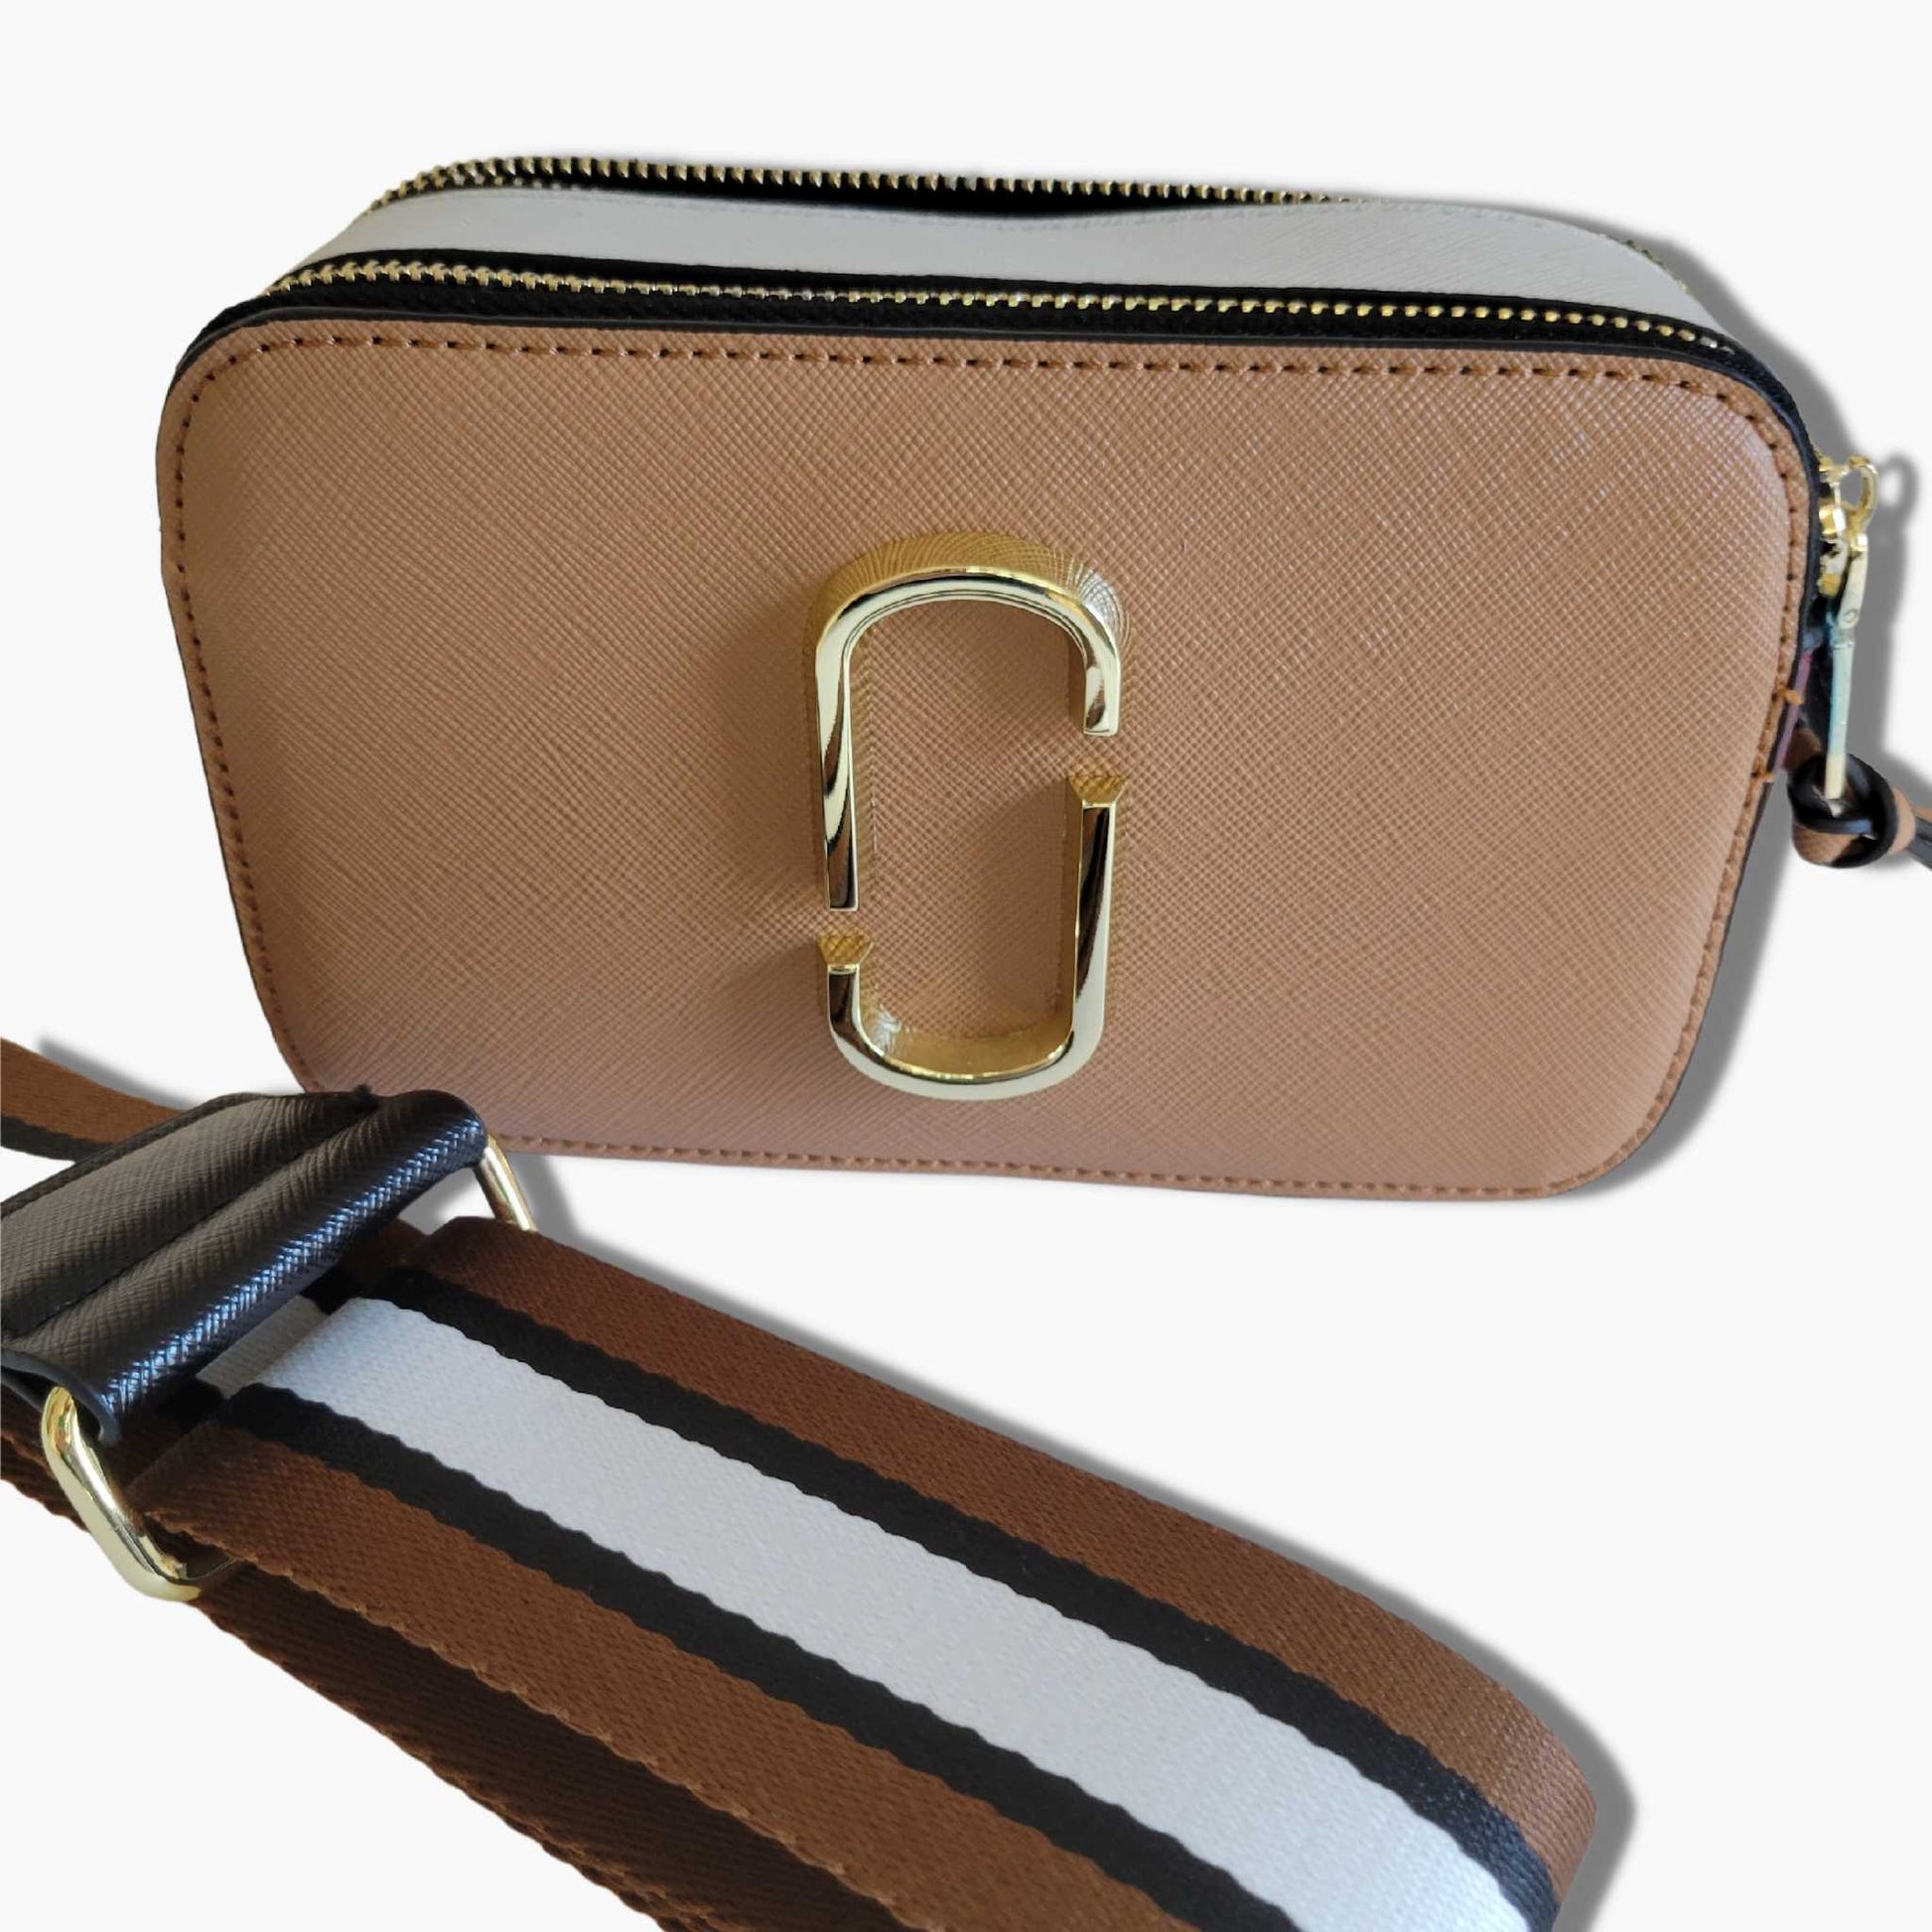 Purse Medium brown/burgundy/white Handbag - Colorblock PU Leather Shoulder, Crossbody or Waist Bags - Camera Bag Style